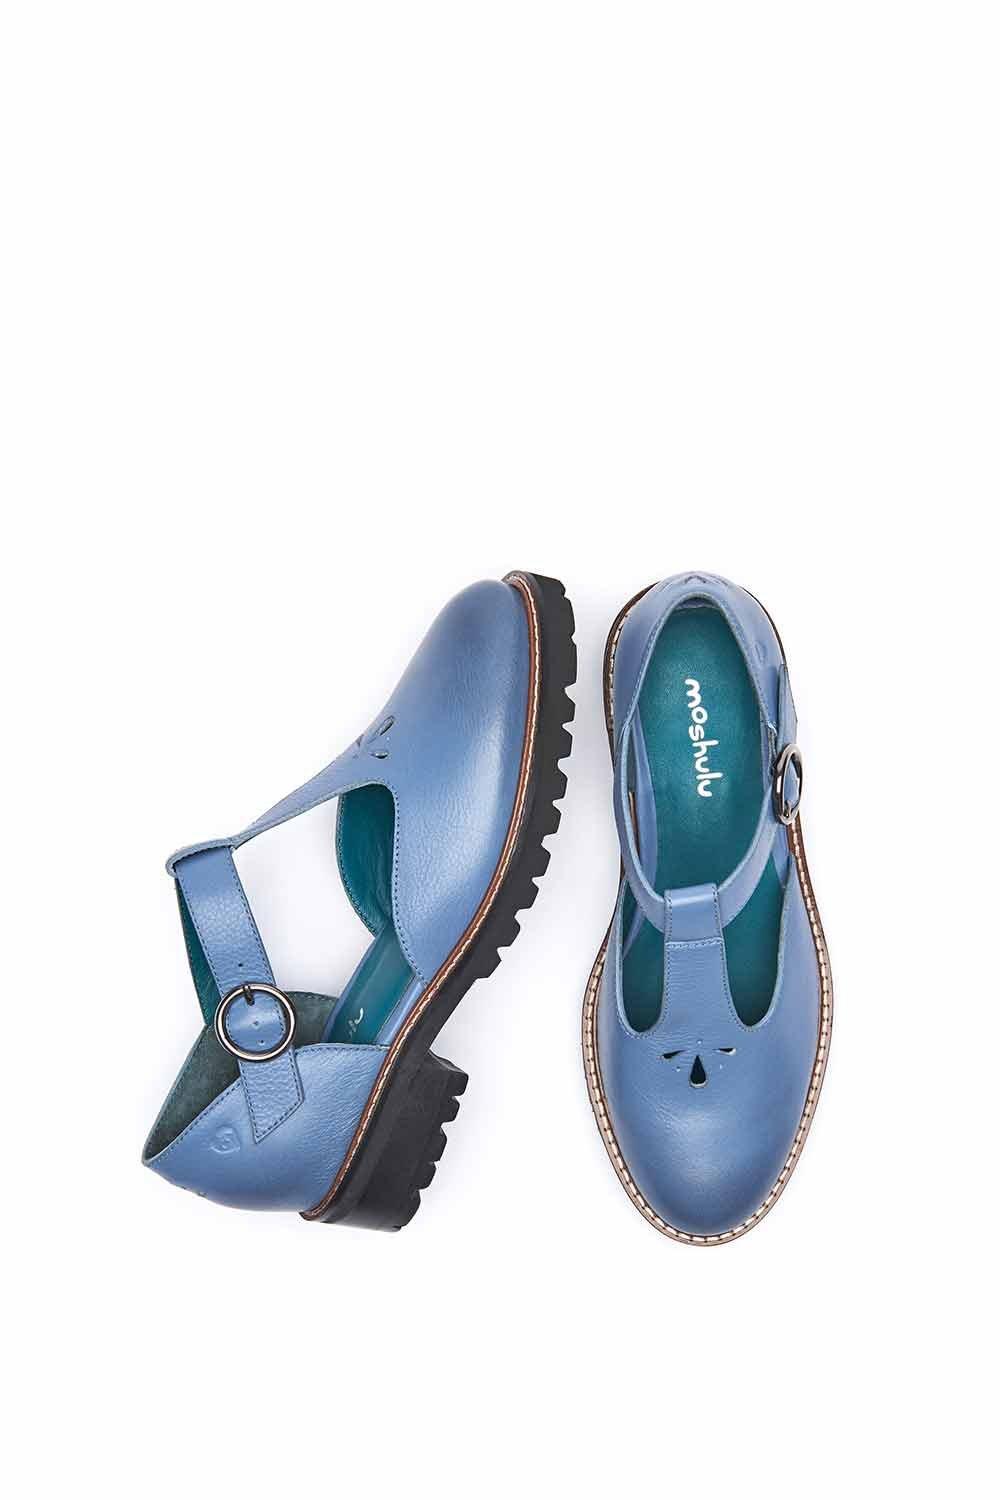 Tutor Sow hvede Moshulu 'Marazion' Leather T-Bar Shoes | Debenhams